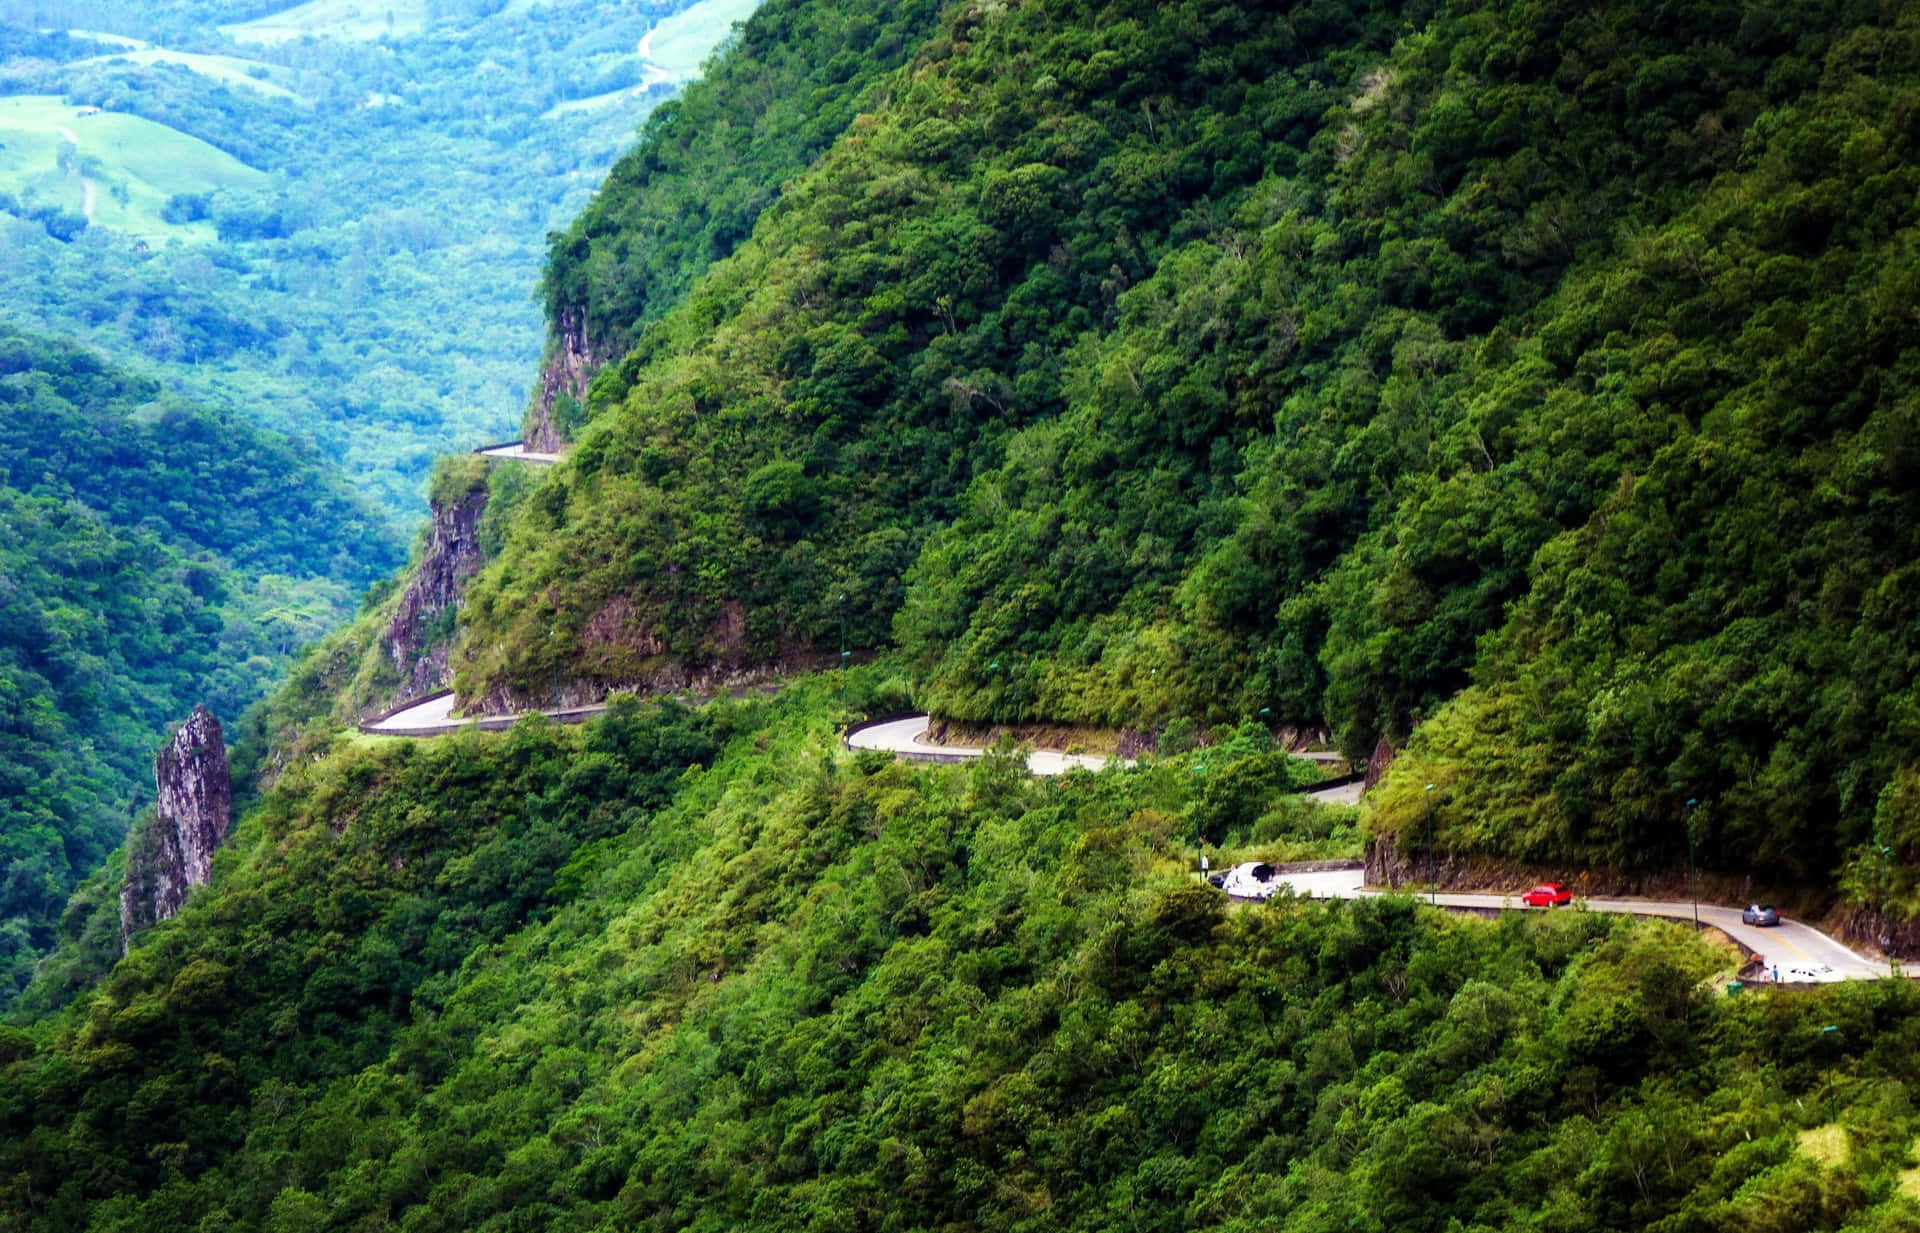 Beautiful Scenic View of Brazil's Iconic Landscape